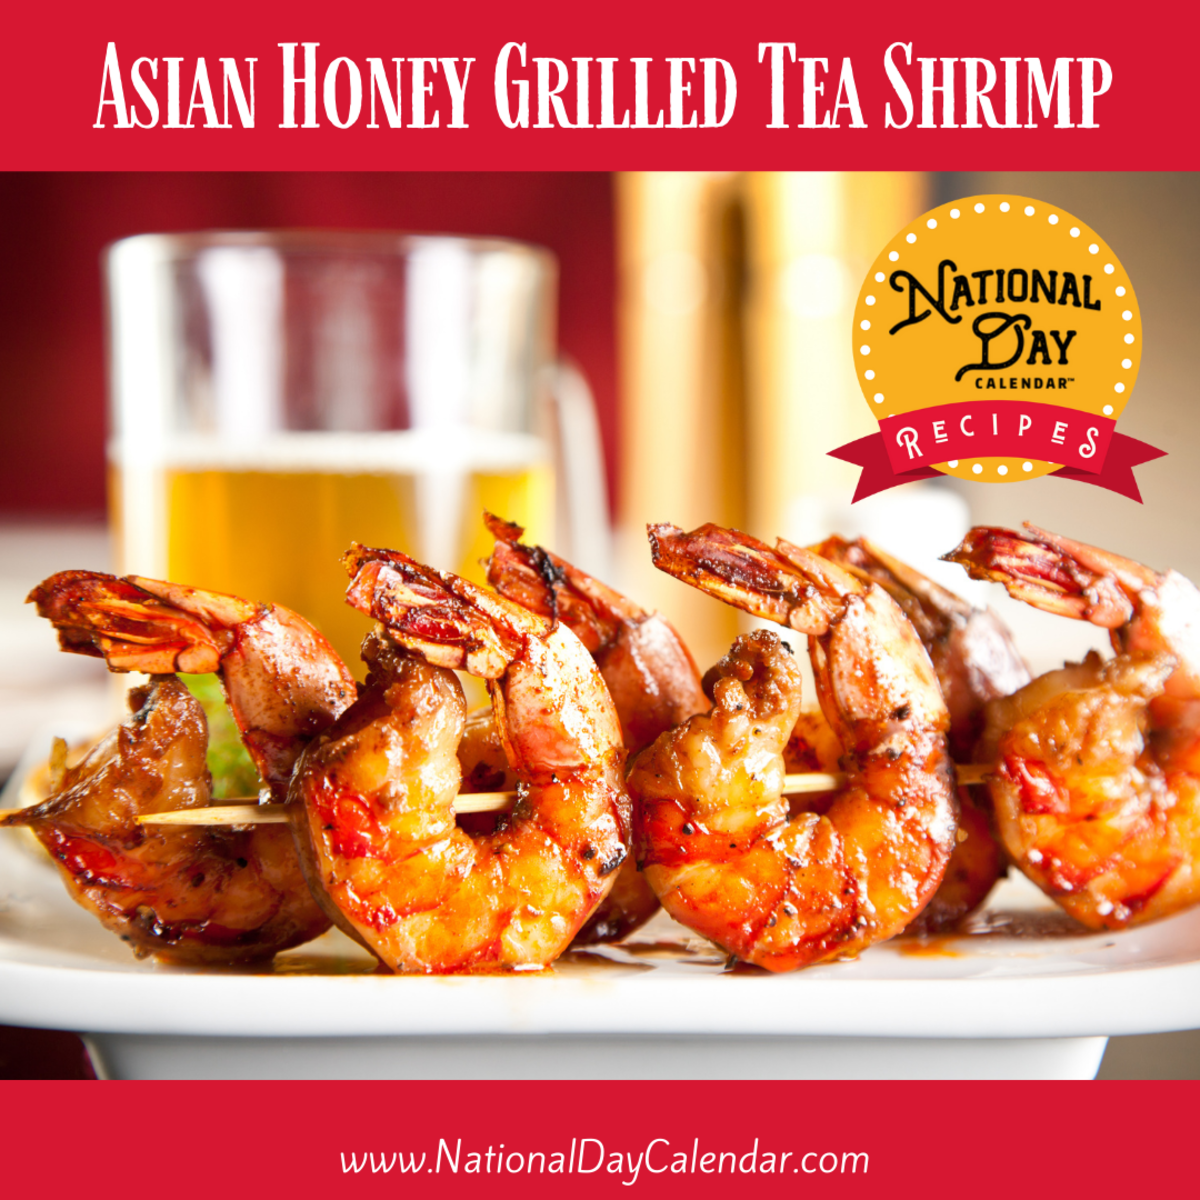 Asian Honey Grilled Tea Shrimp